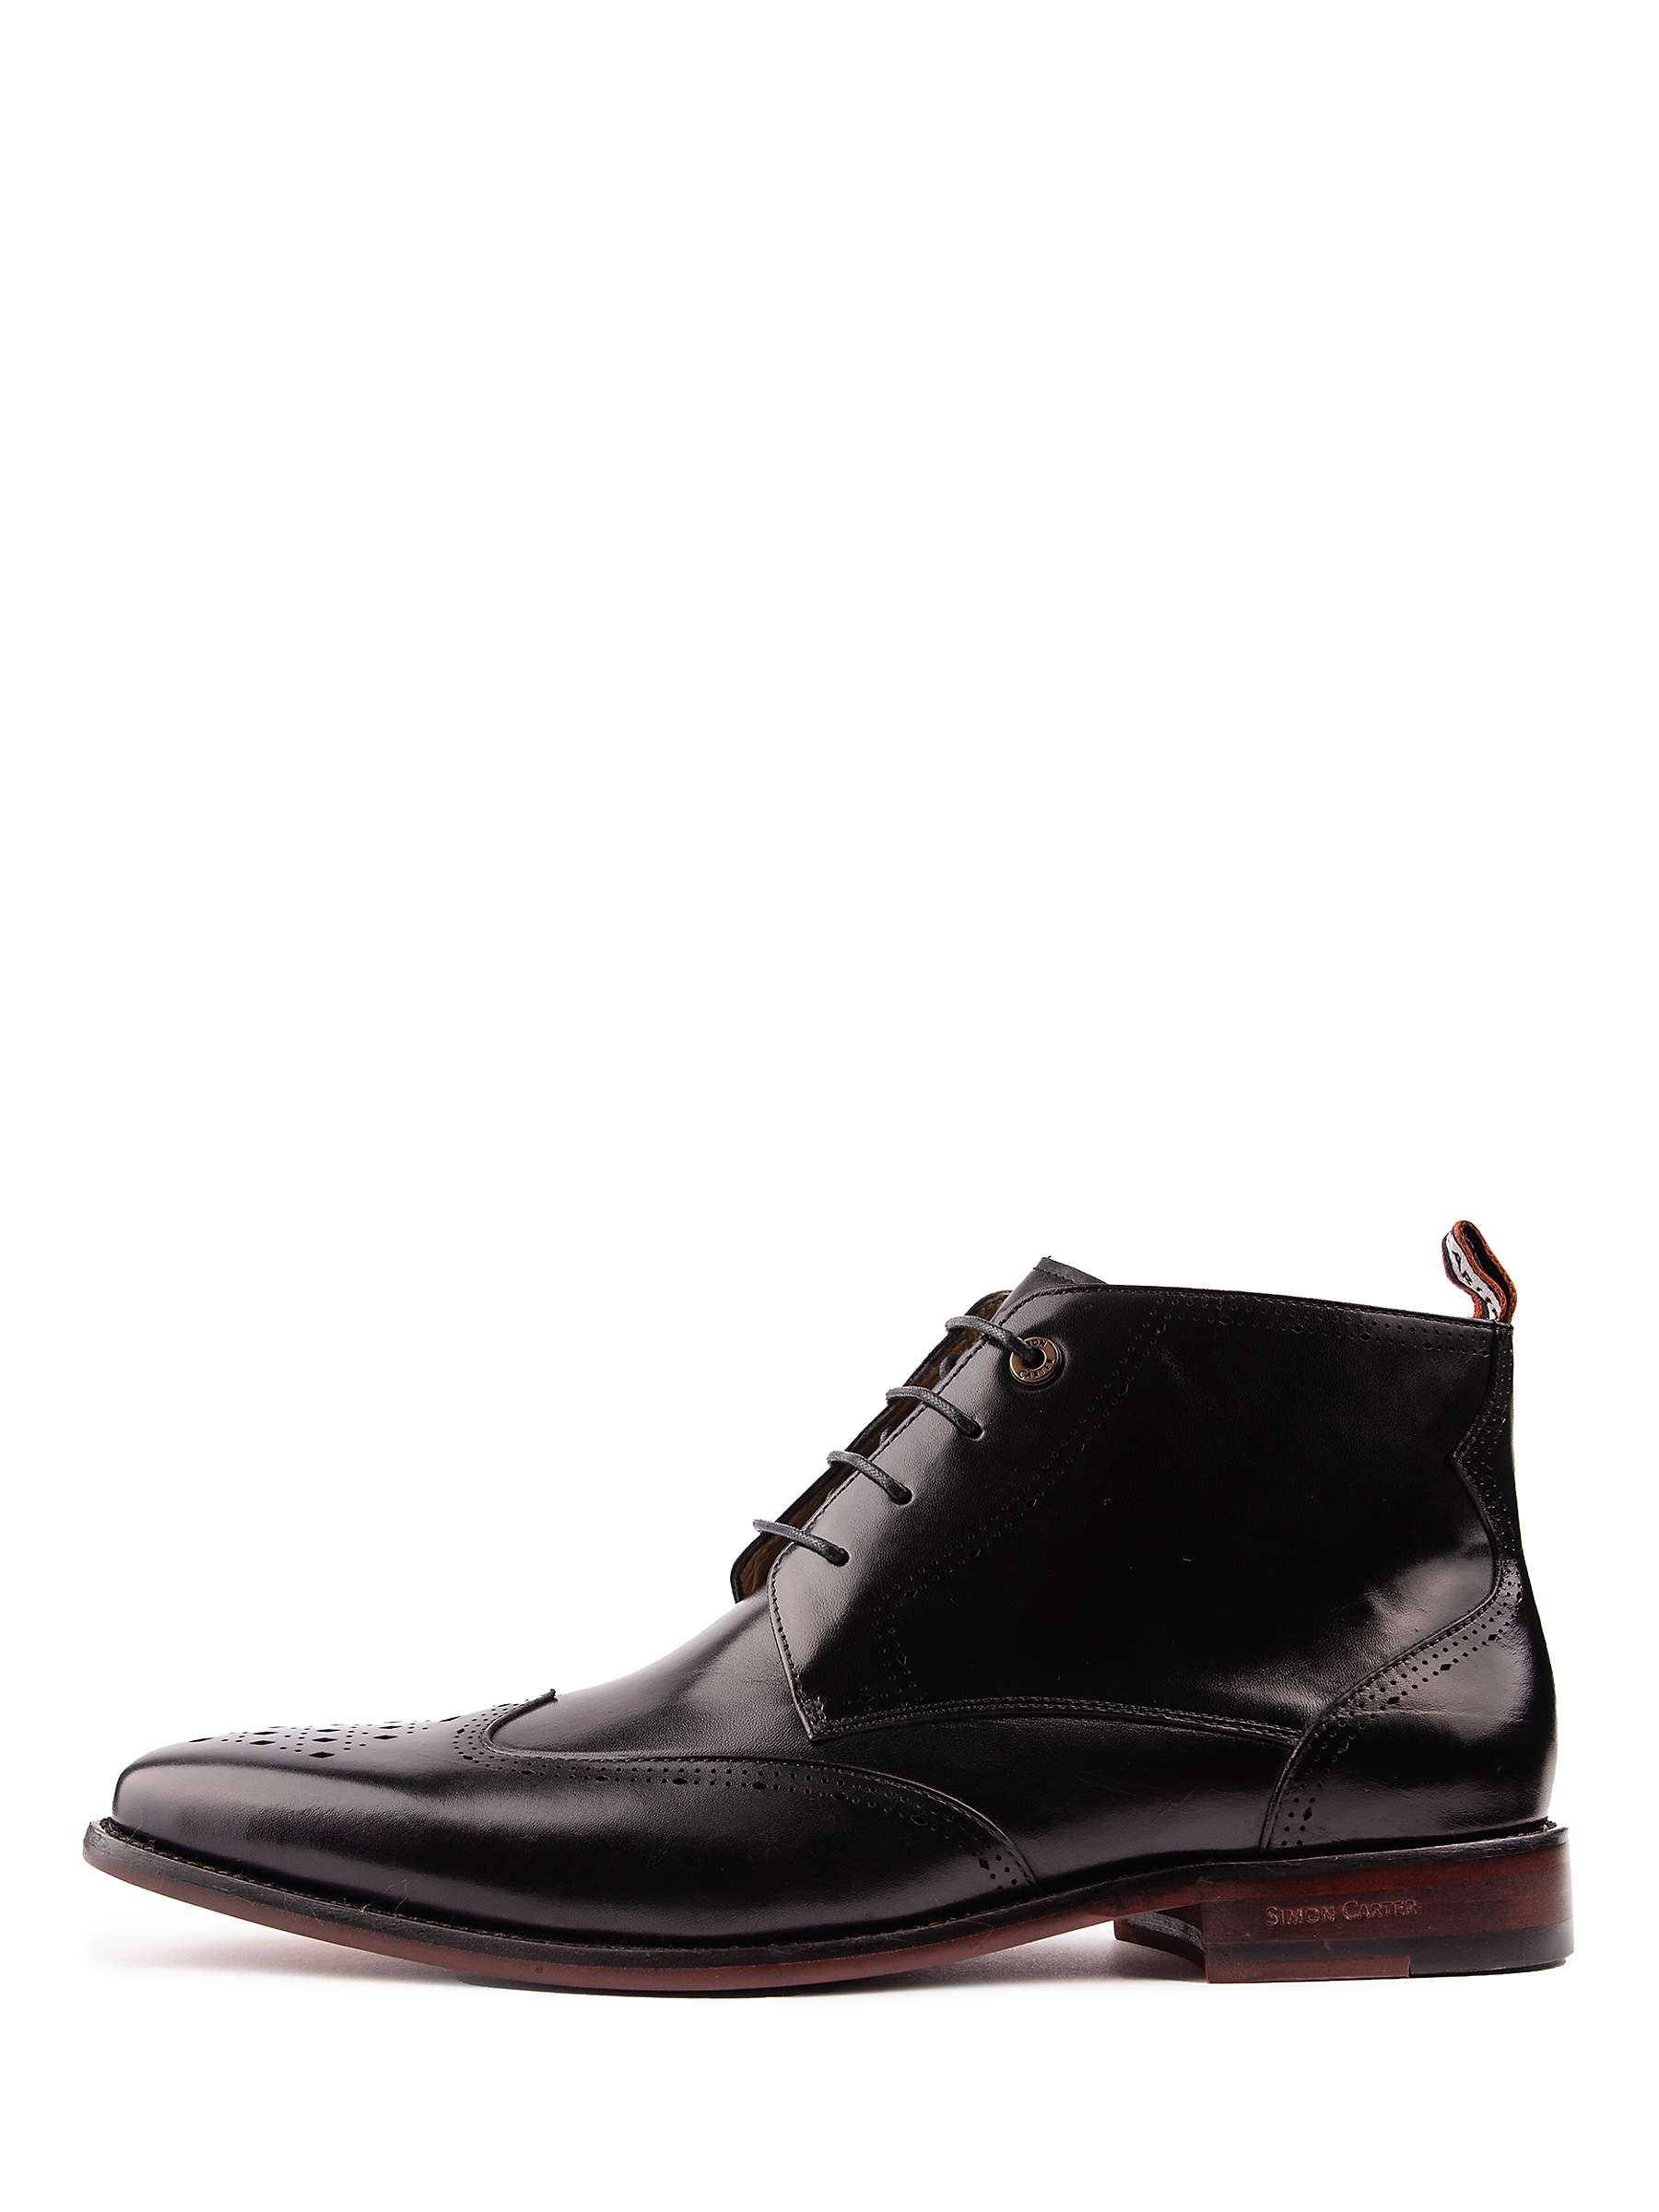 Buy Simon Carter Whisker Leather Chukka Boots, Black Online at johnlewis.com